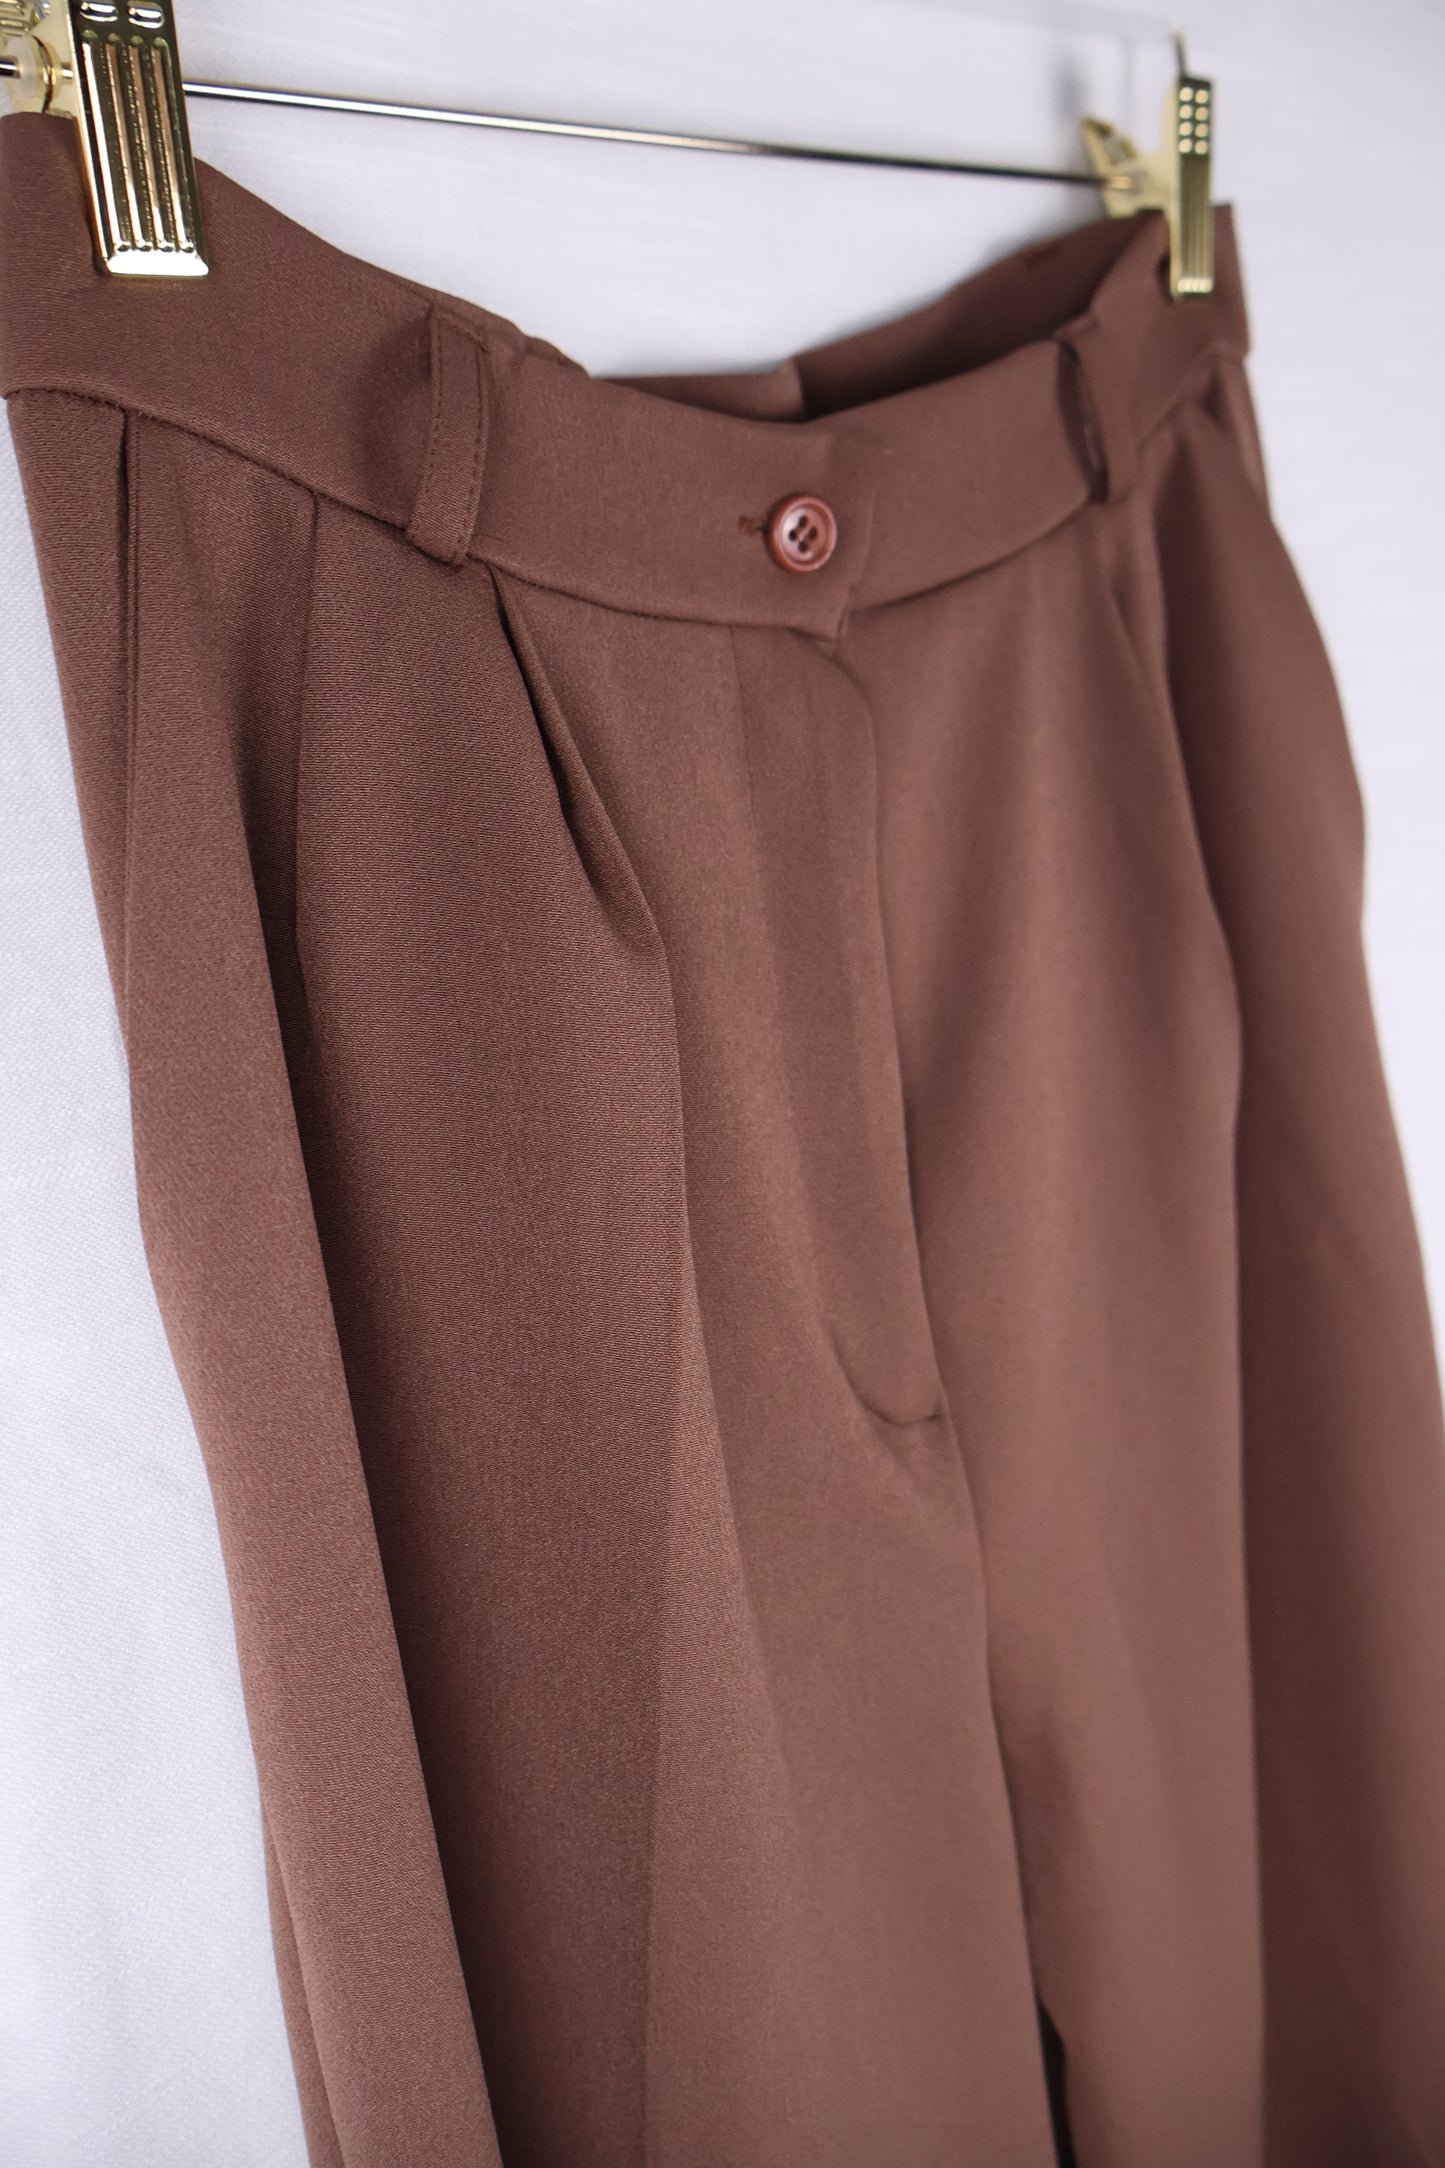 Brown Dress Slacks